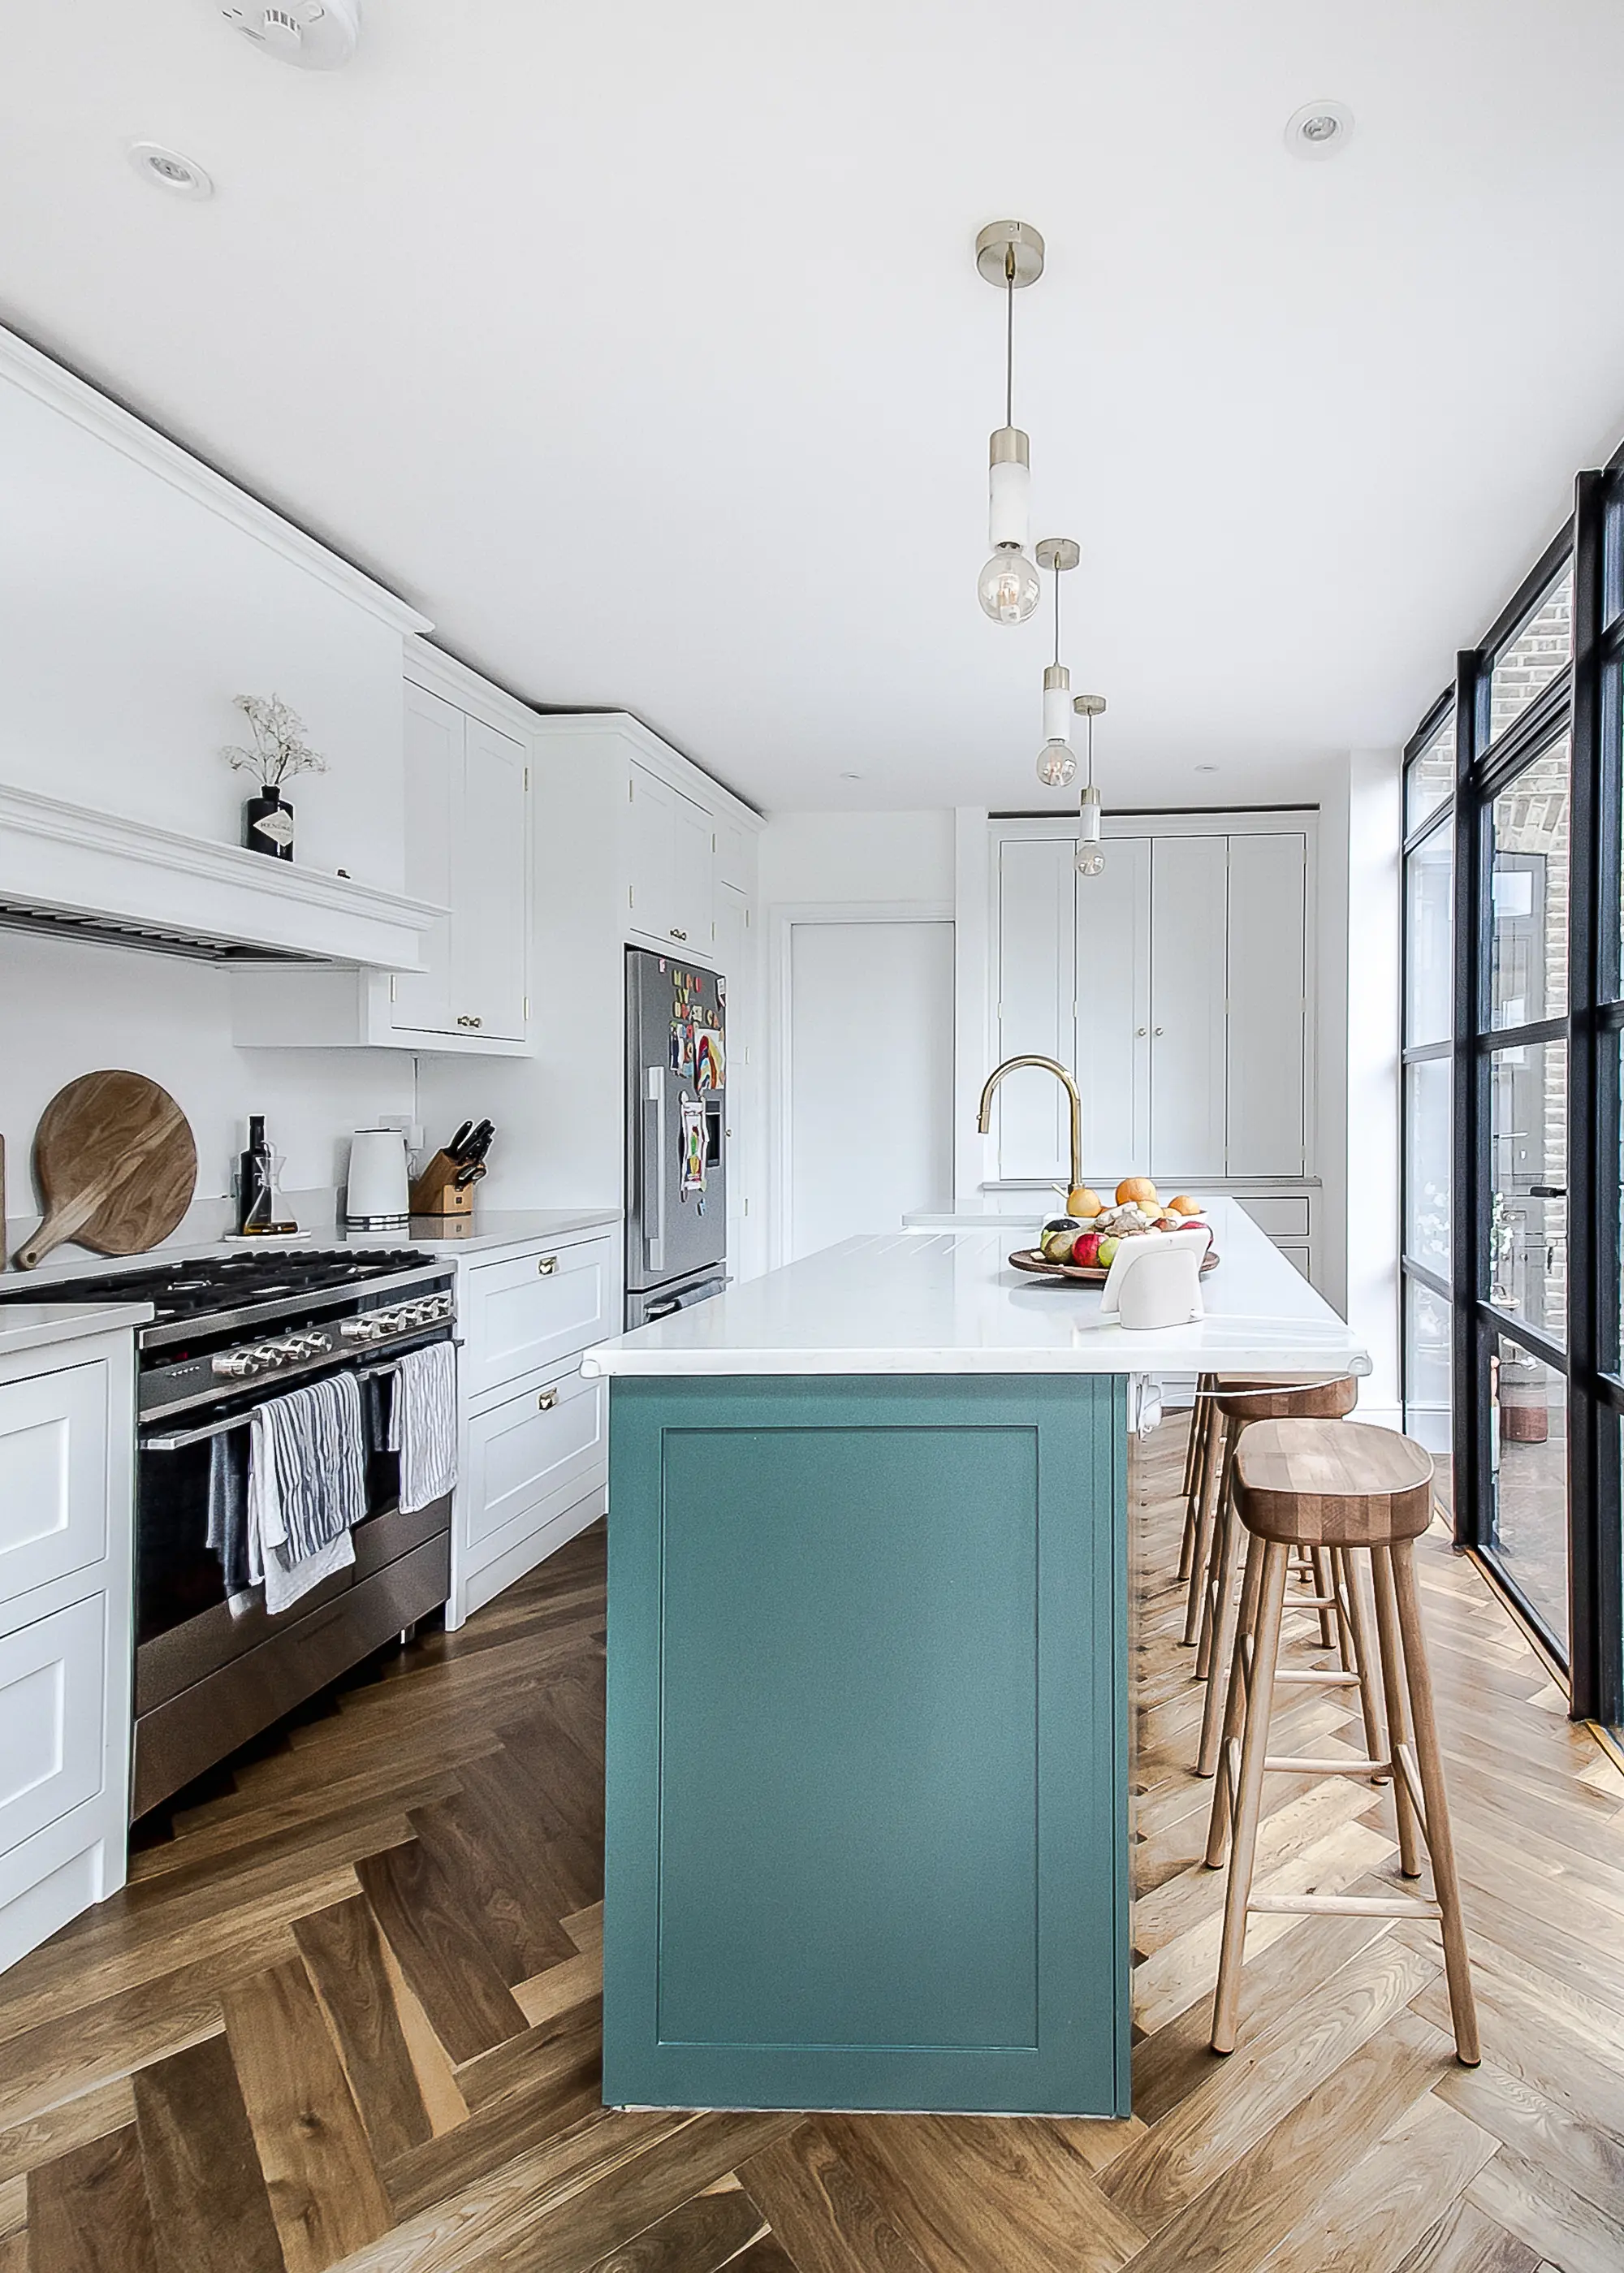 White kitchen with oak herringbone floor, turquoise island and bar stool seating